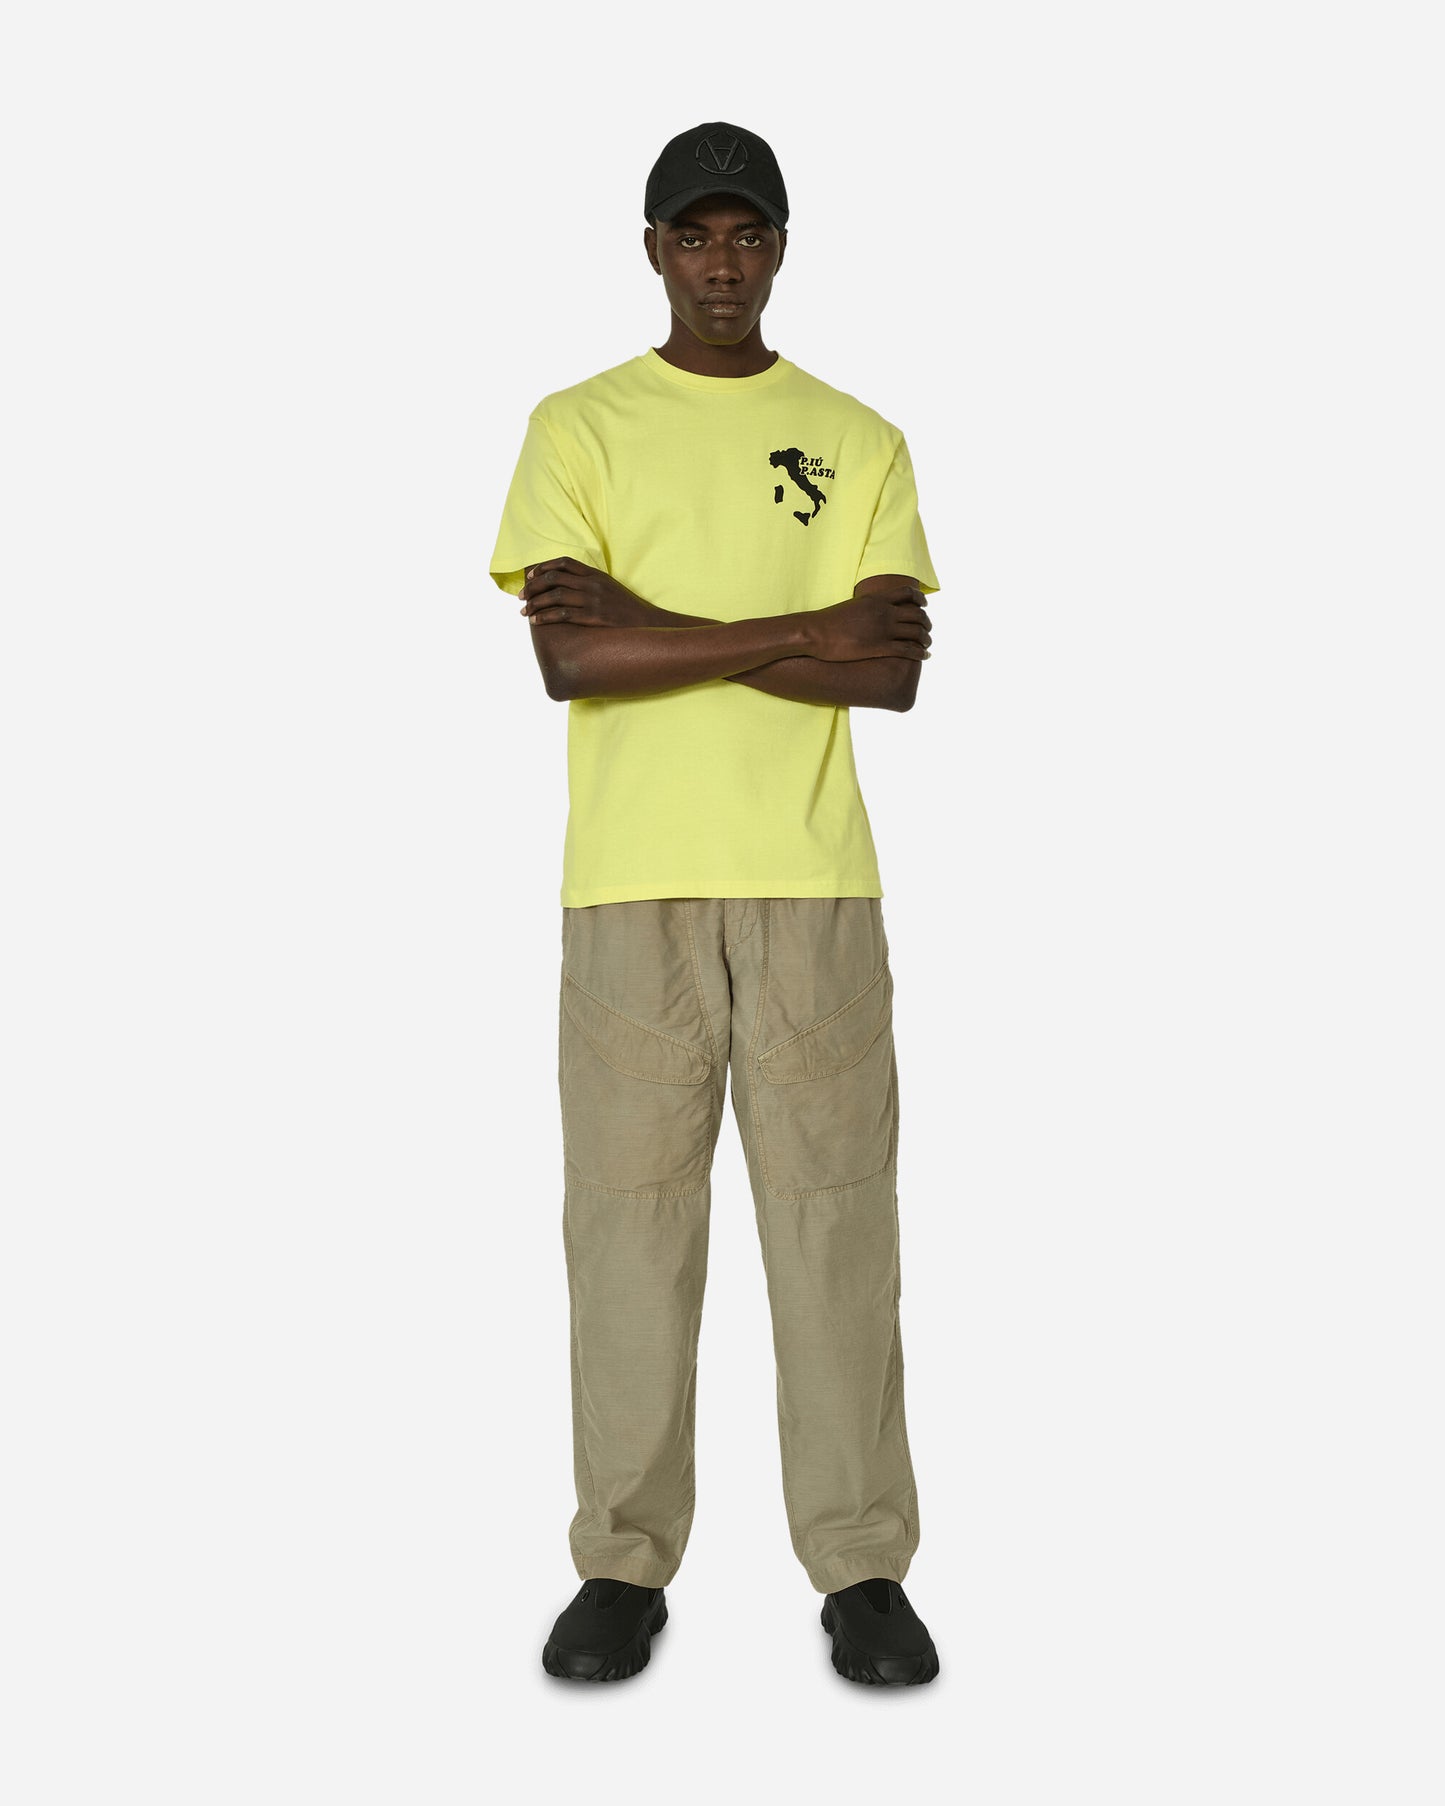 Public Possession "P.Iu P.Asta" T-Shirt Stonewashed Yellow T-Shirts Shortsleeve PPMODA24-010  1